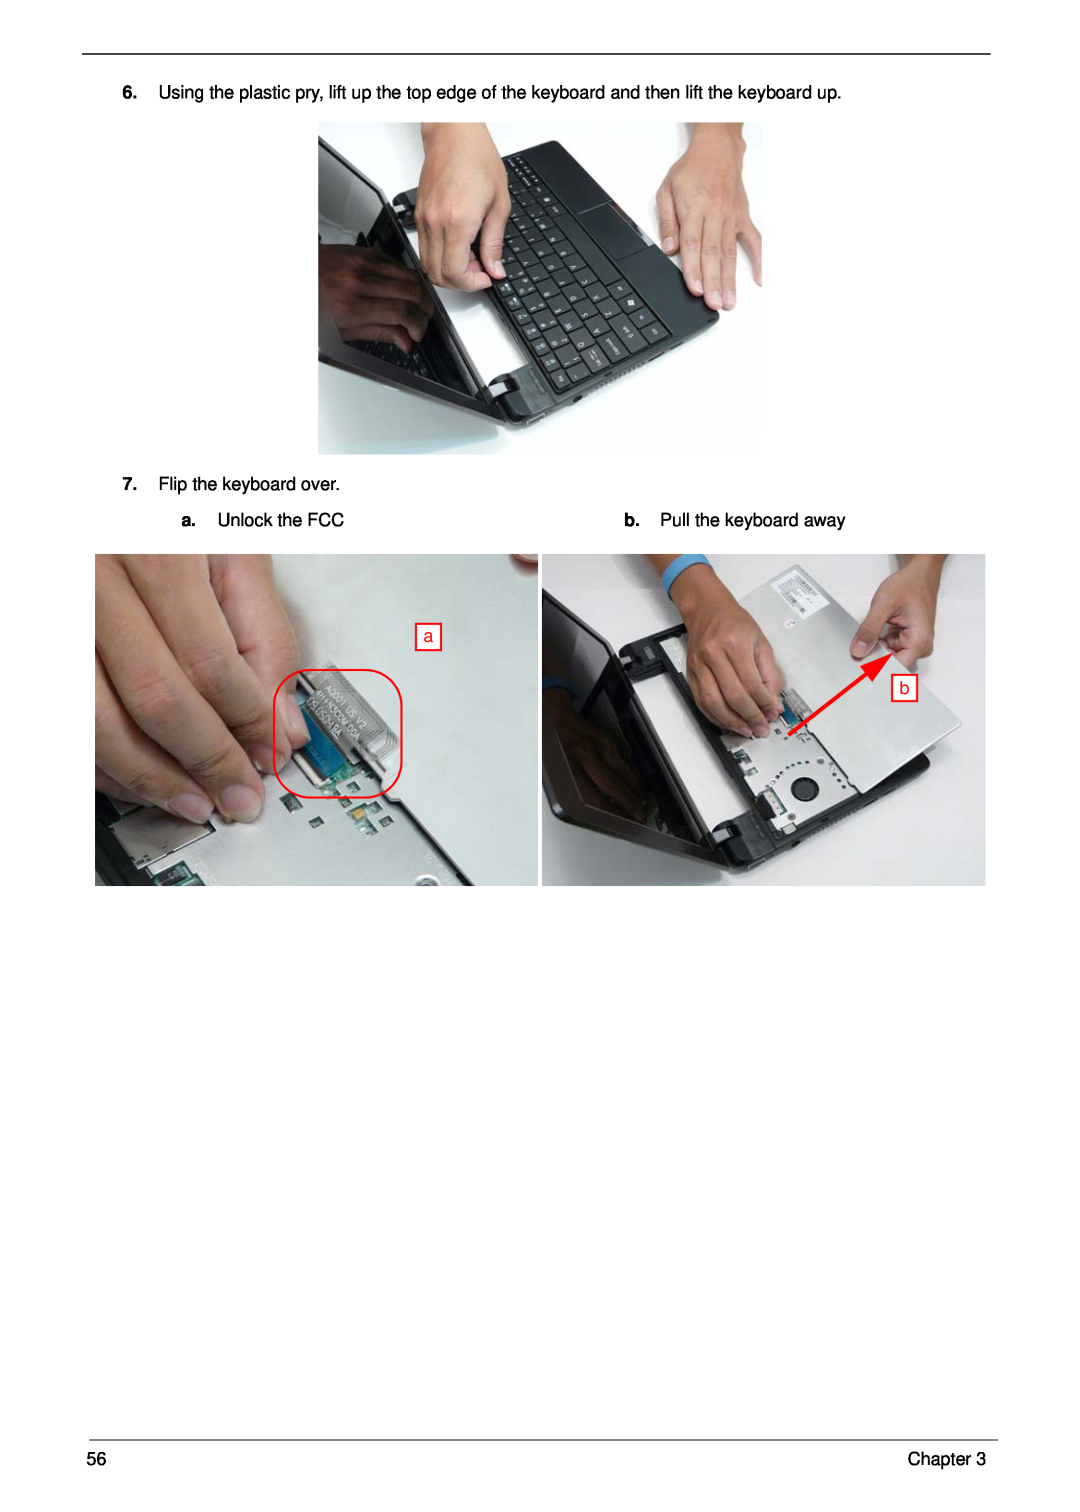 Gateway EC14 manual Flip the keyboard over. a. Unlock the FCC, b. Pull the keyboard away 